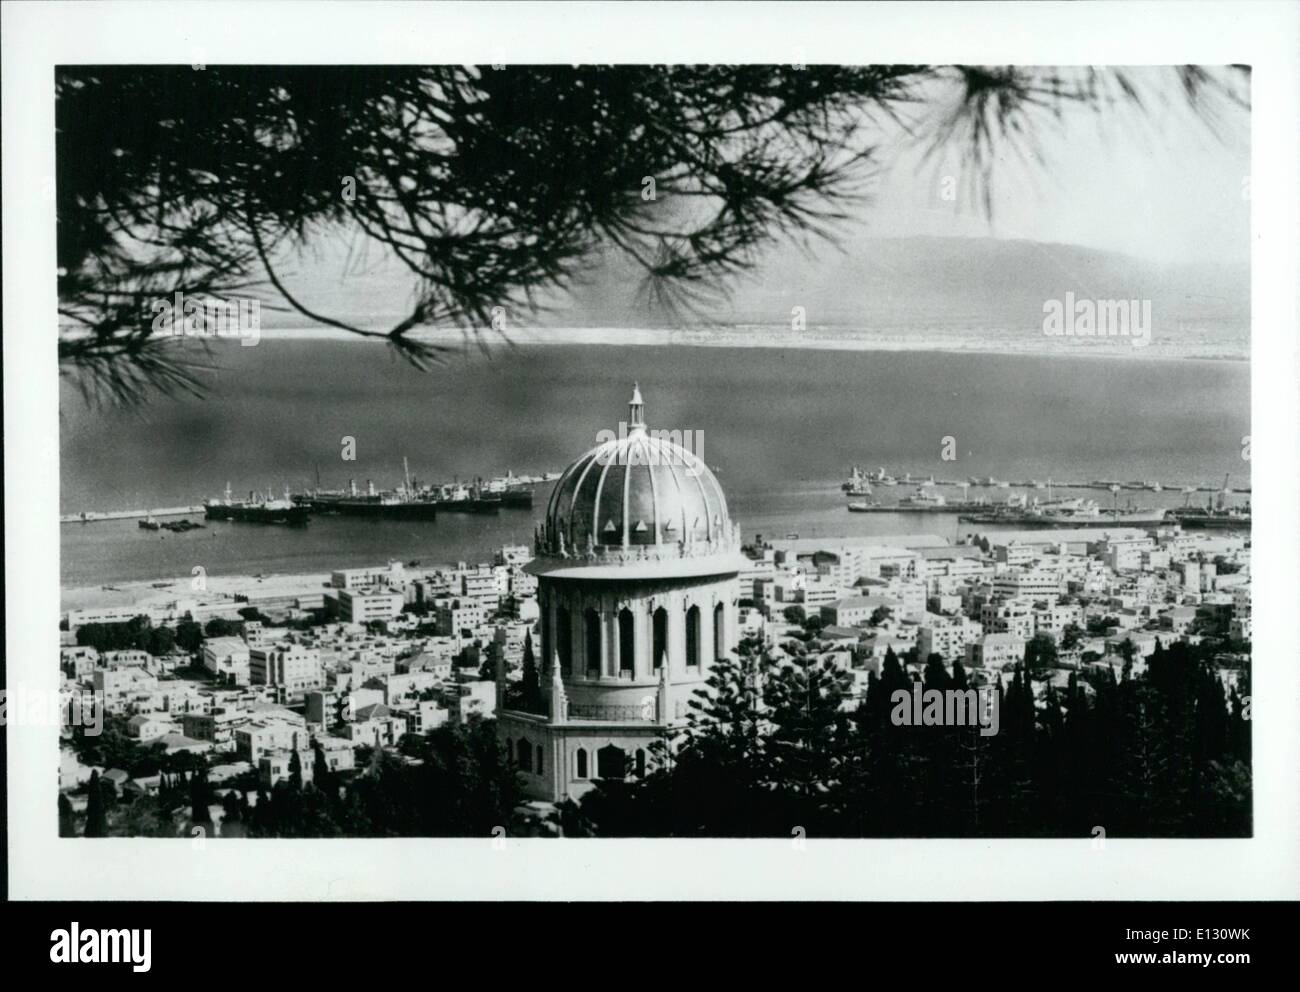 Febbraio 26, 2012 - Una vista del golden a cupola del Santuario del Bab Prophet-Herald della Baha 'ho fede guardando sopra la baia di Haifa Foto Stock